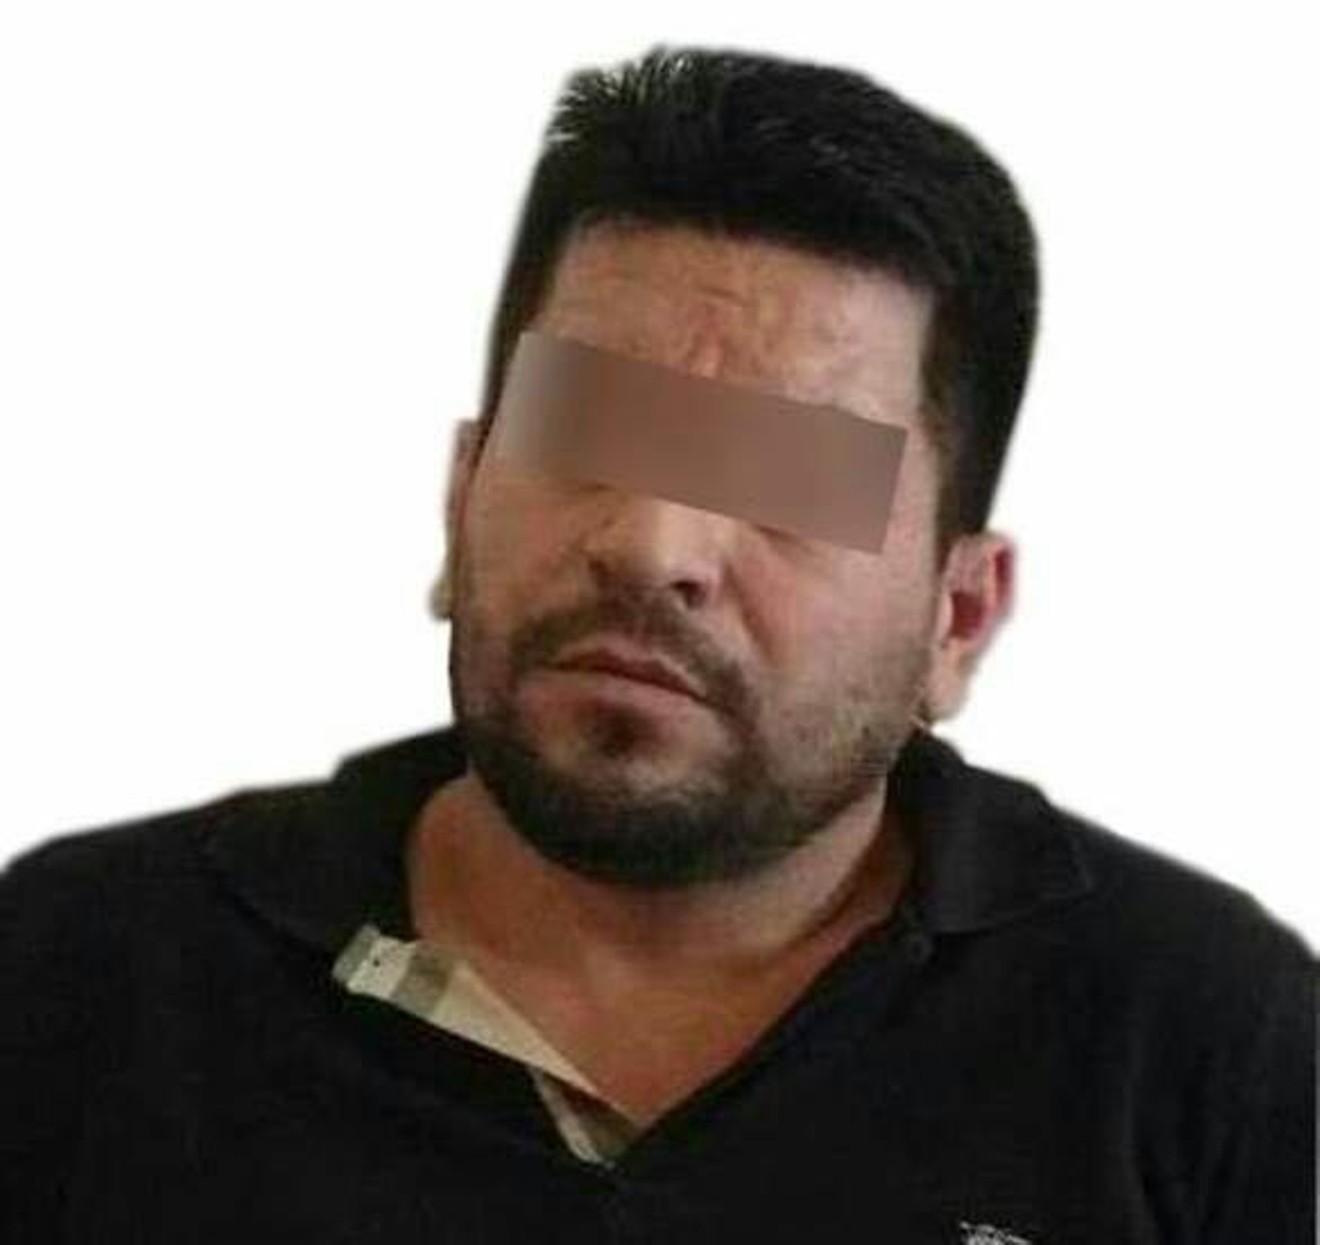 Luis Lauro Ramirez Bautista, also known as "El Mora" is a high-ranking member of the Beltran Leyva cartel.